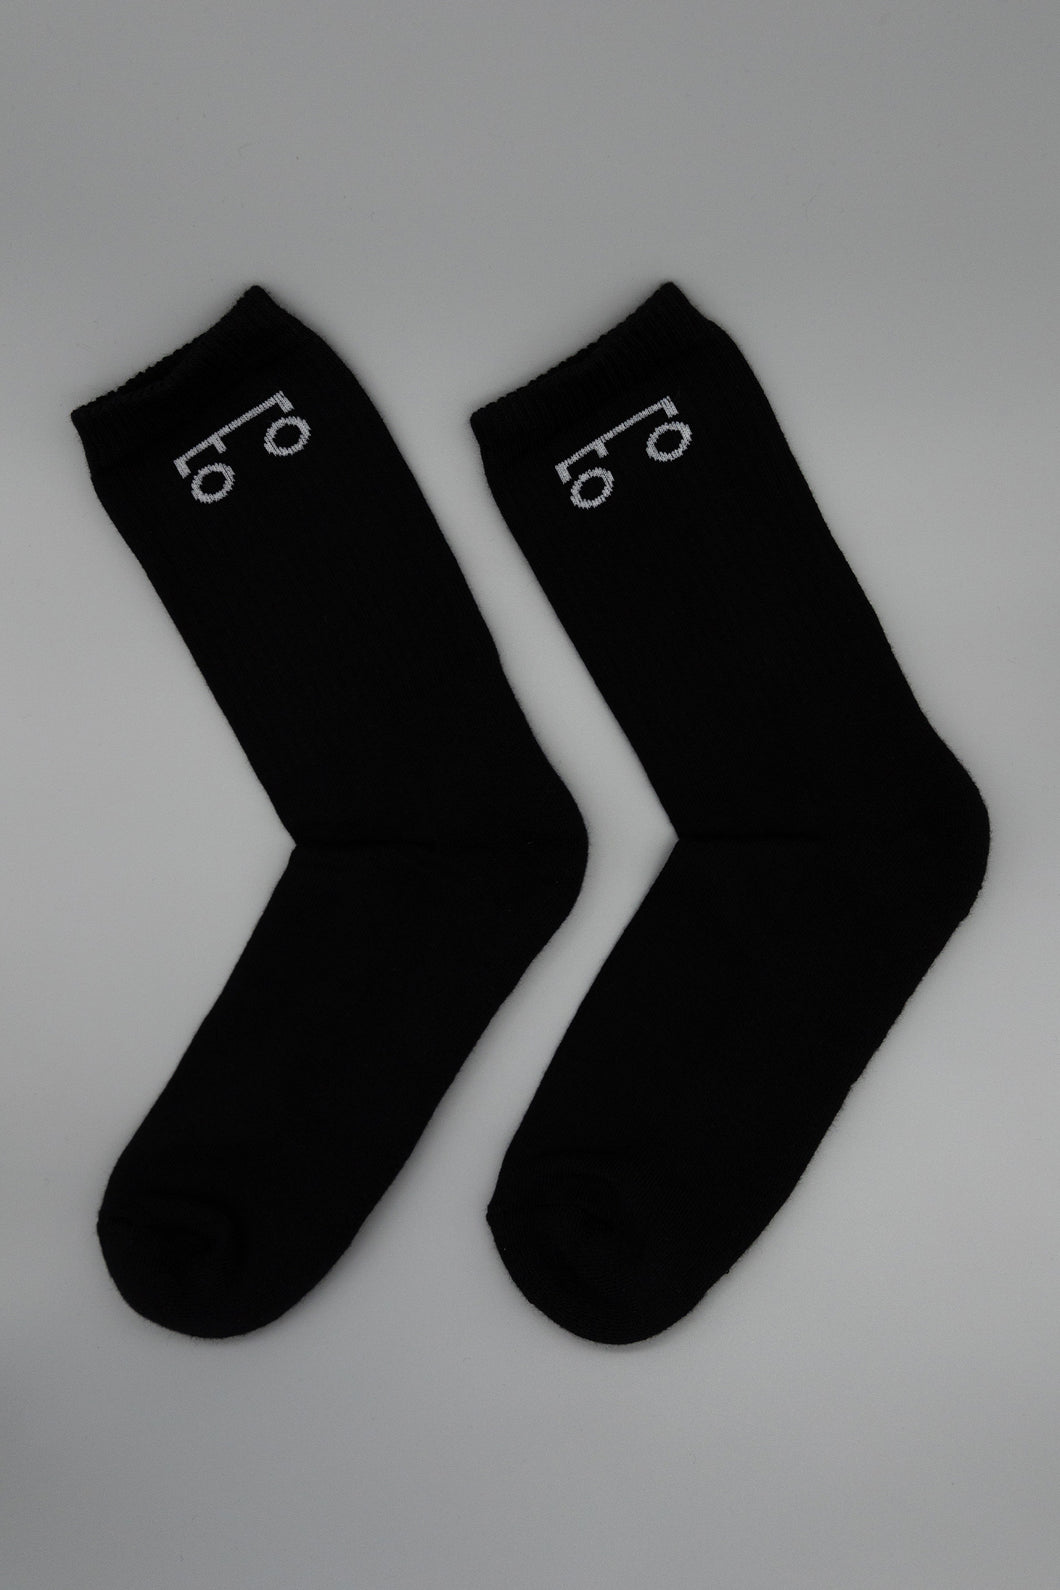 Skate socks